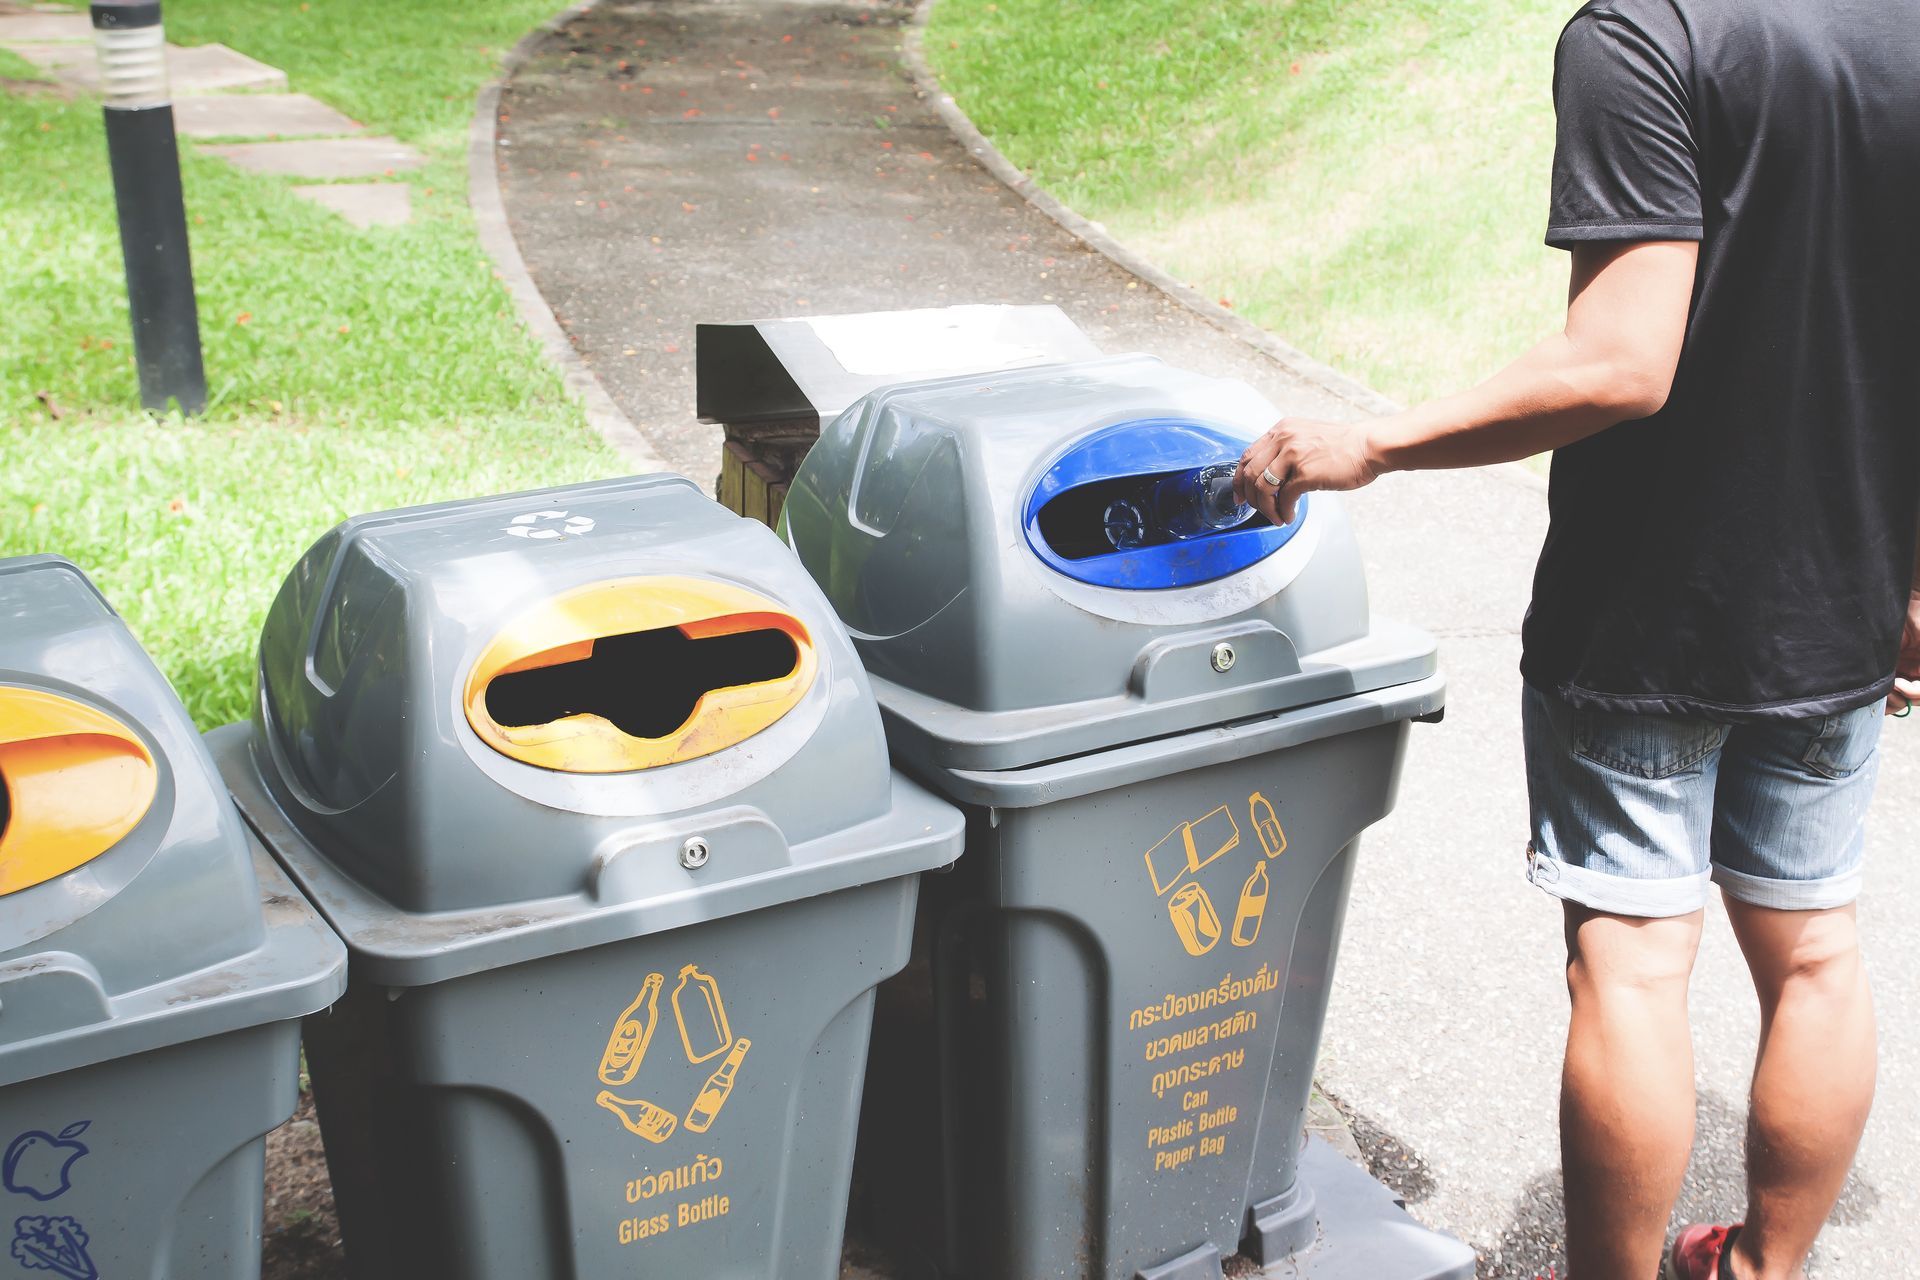 Man throws plastic bottle into recycling bin